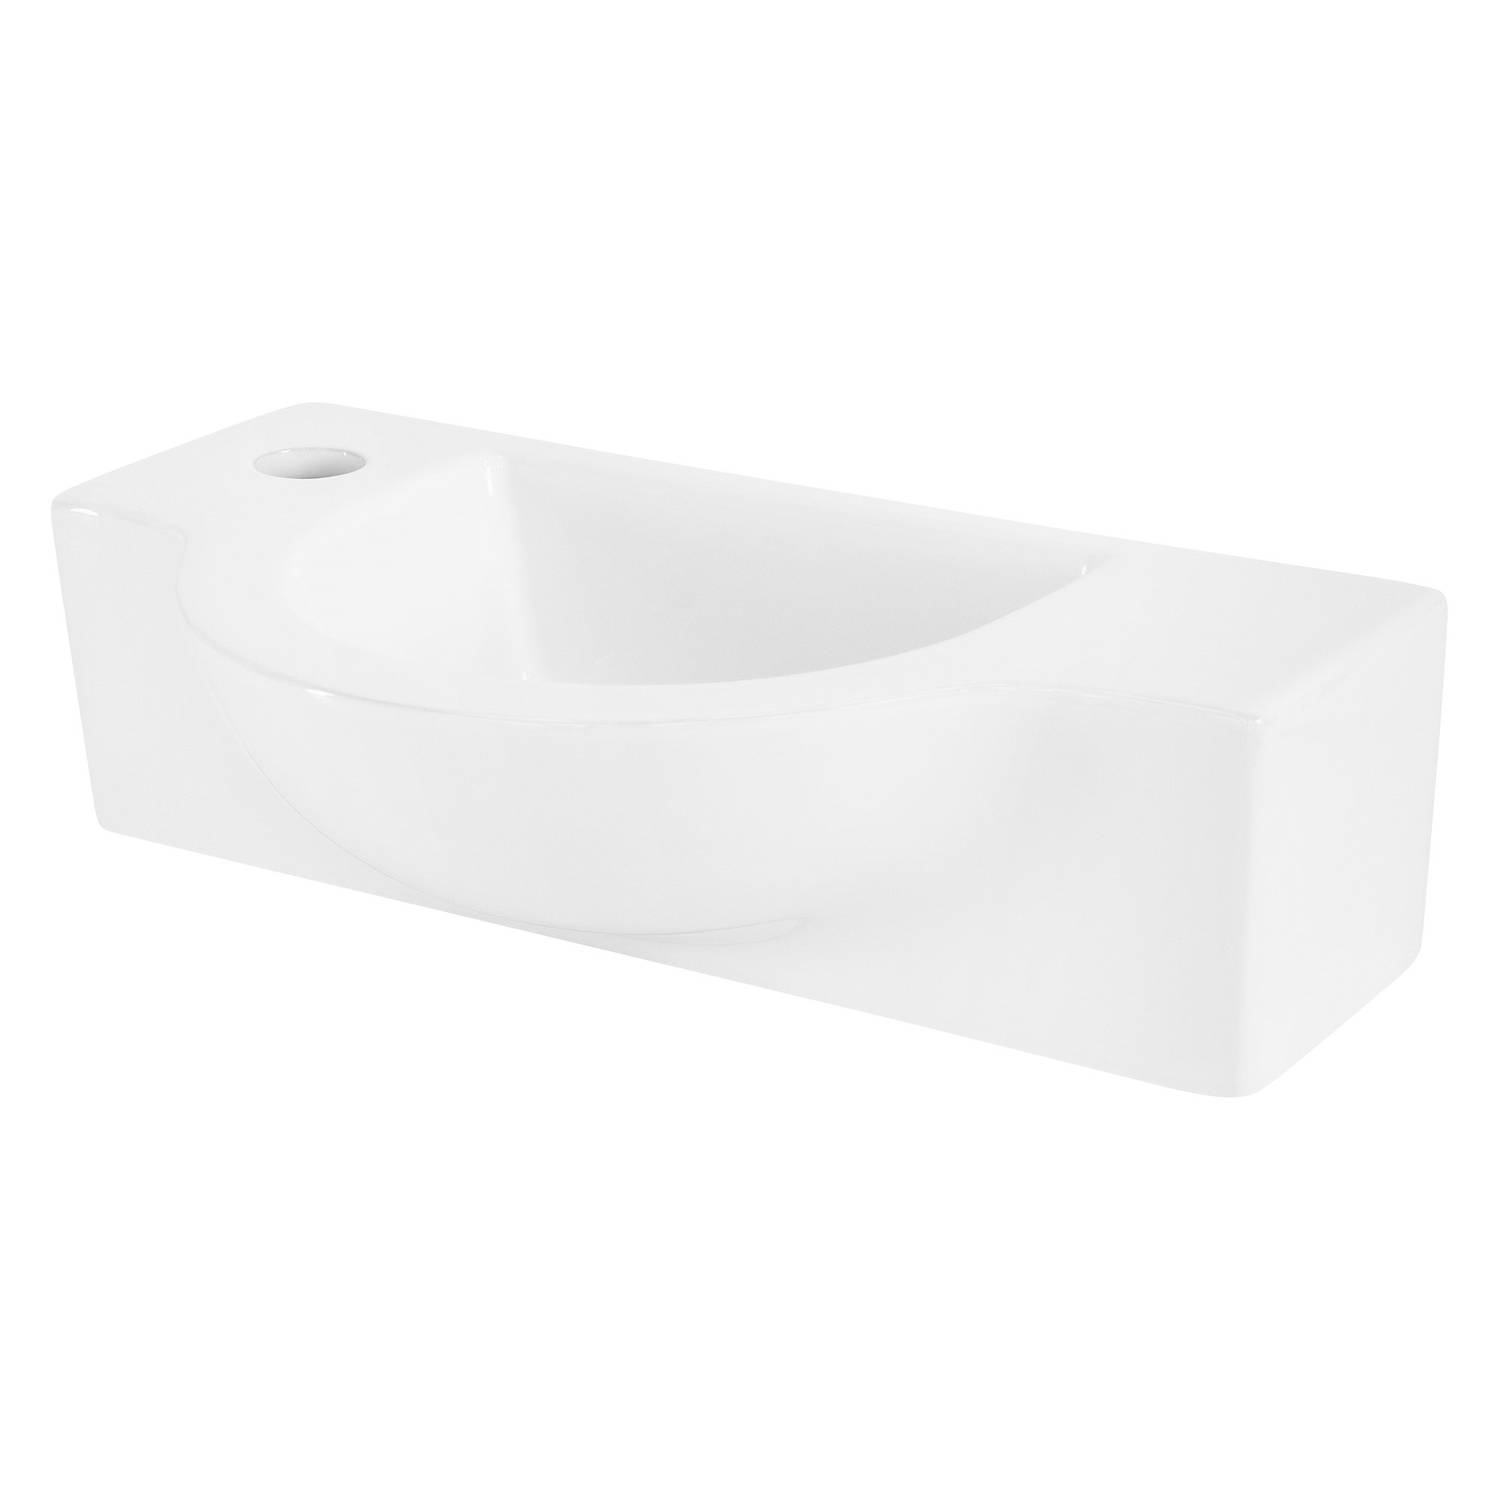 ML-Design keramische wastafel in wit, 44,5x25,5x12 cm, ovaal, klein, kraangat links, wand- of opzetwastafel, moderne waskom wastafel, voor badkamer